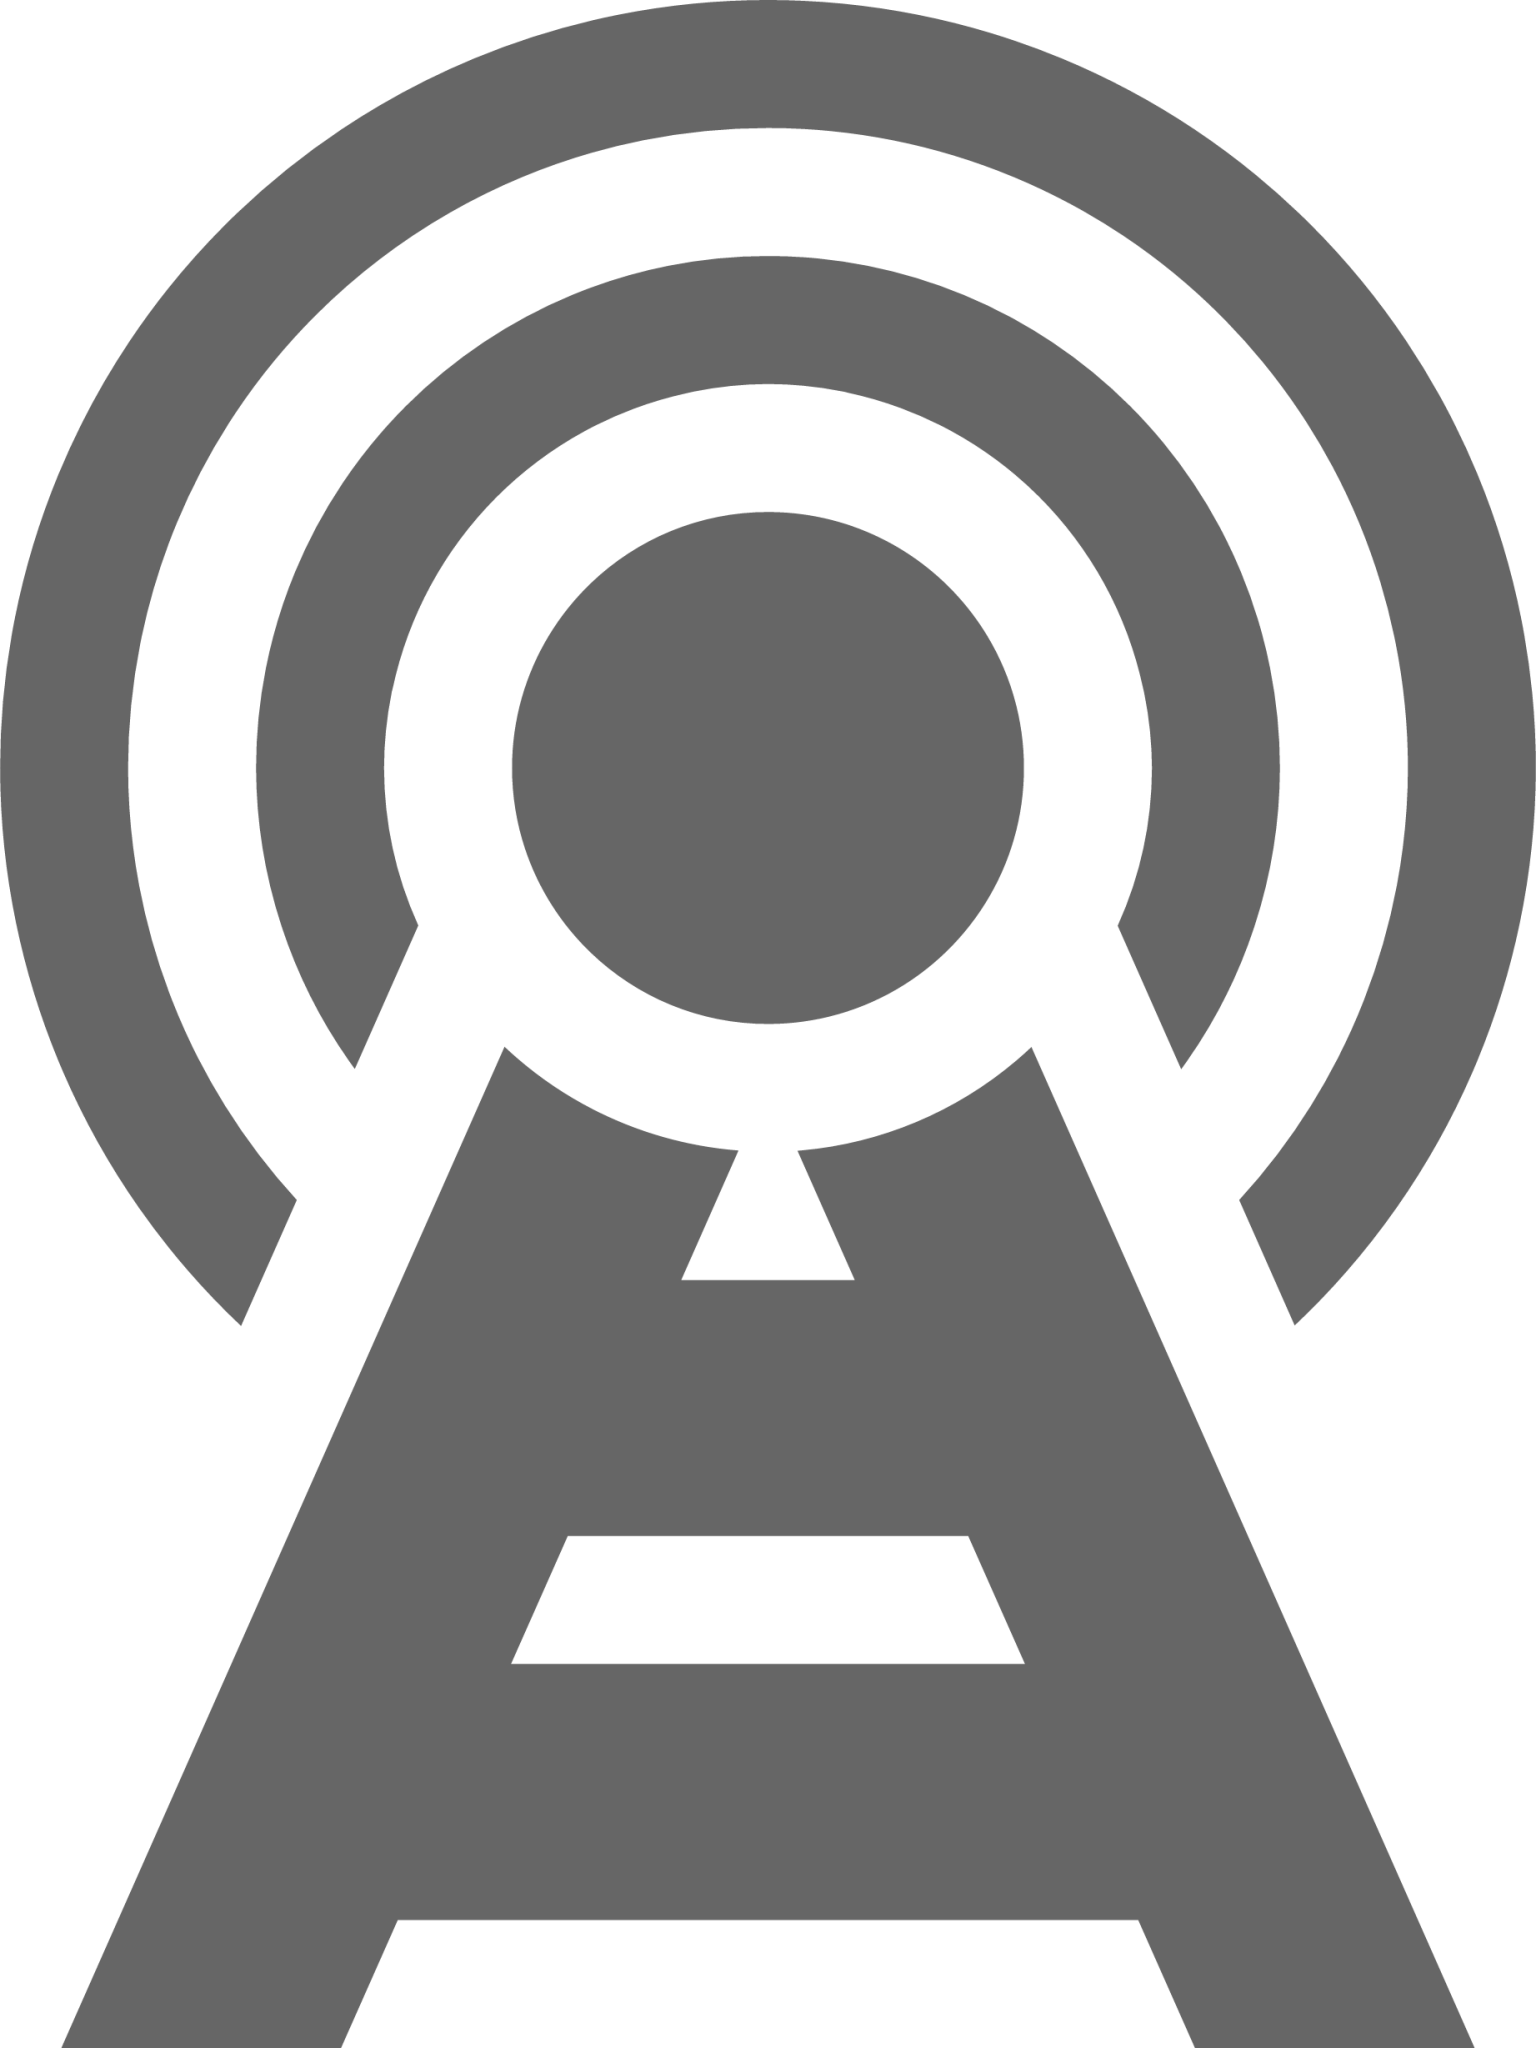 internet radio symbolic icon